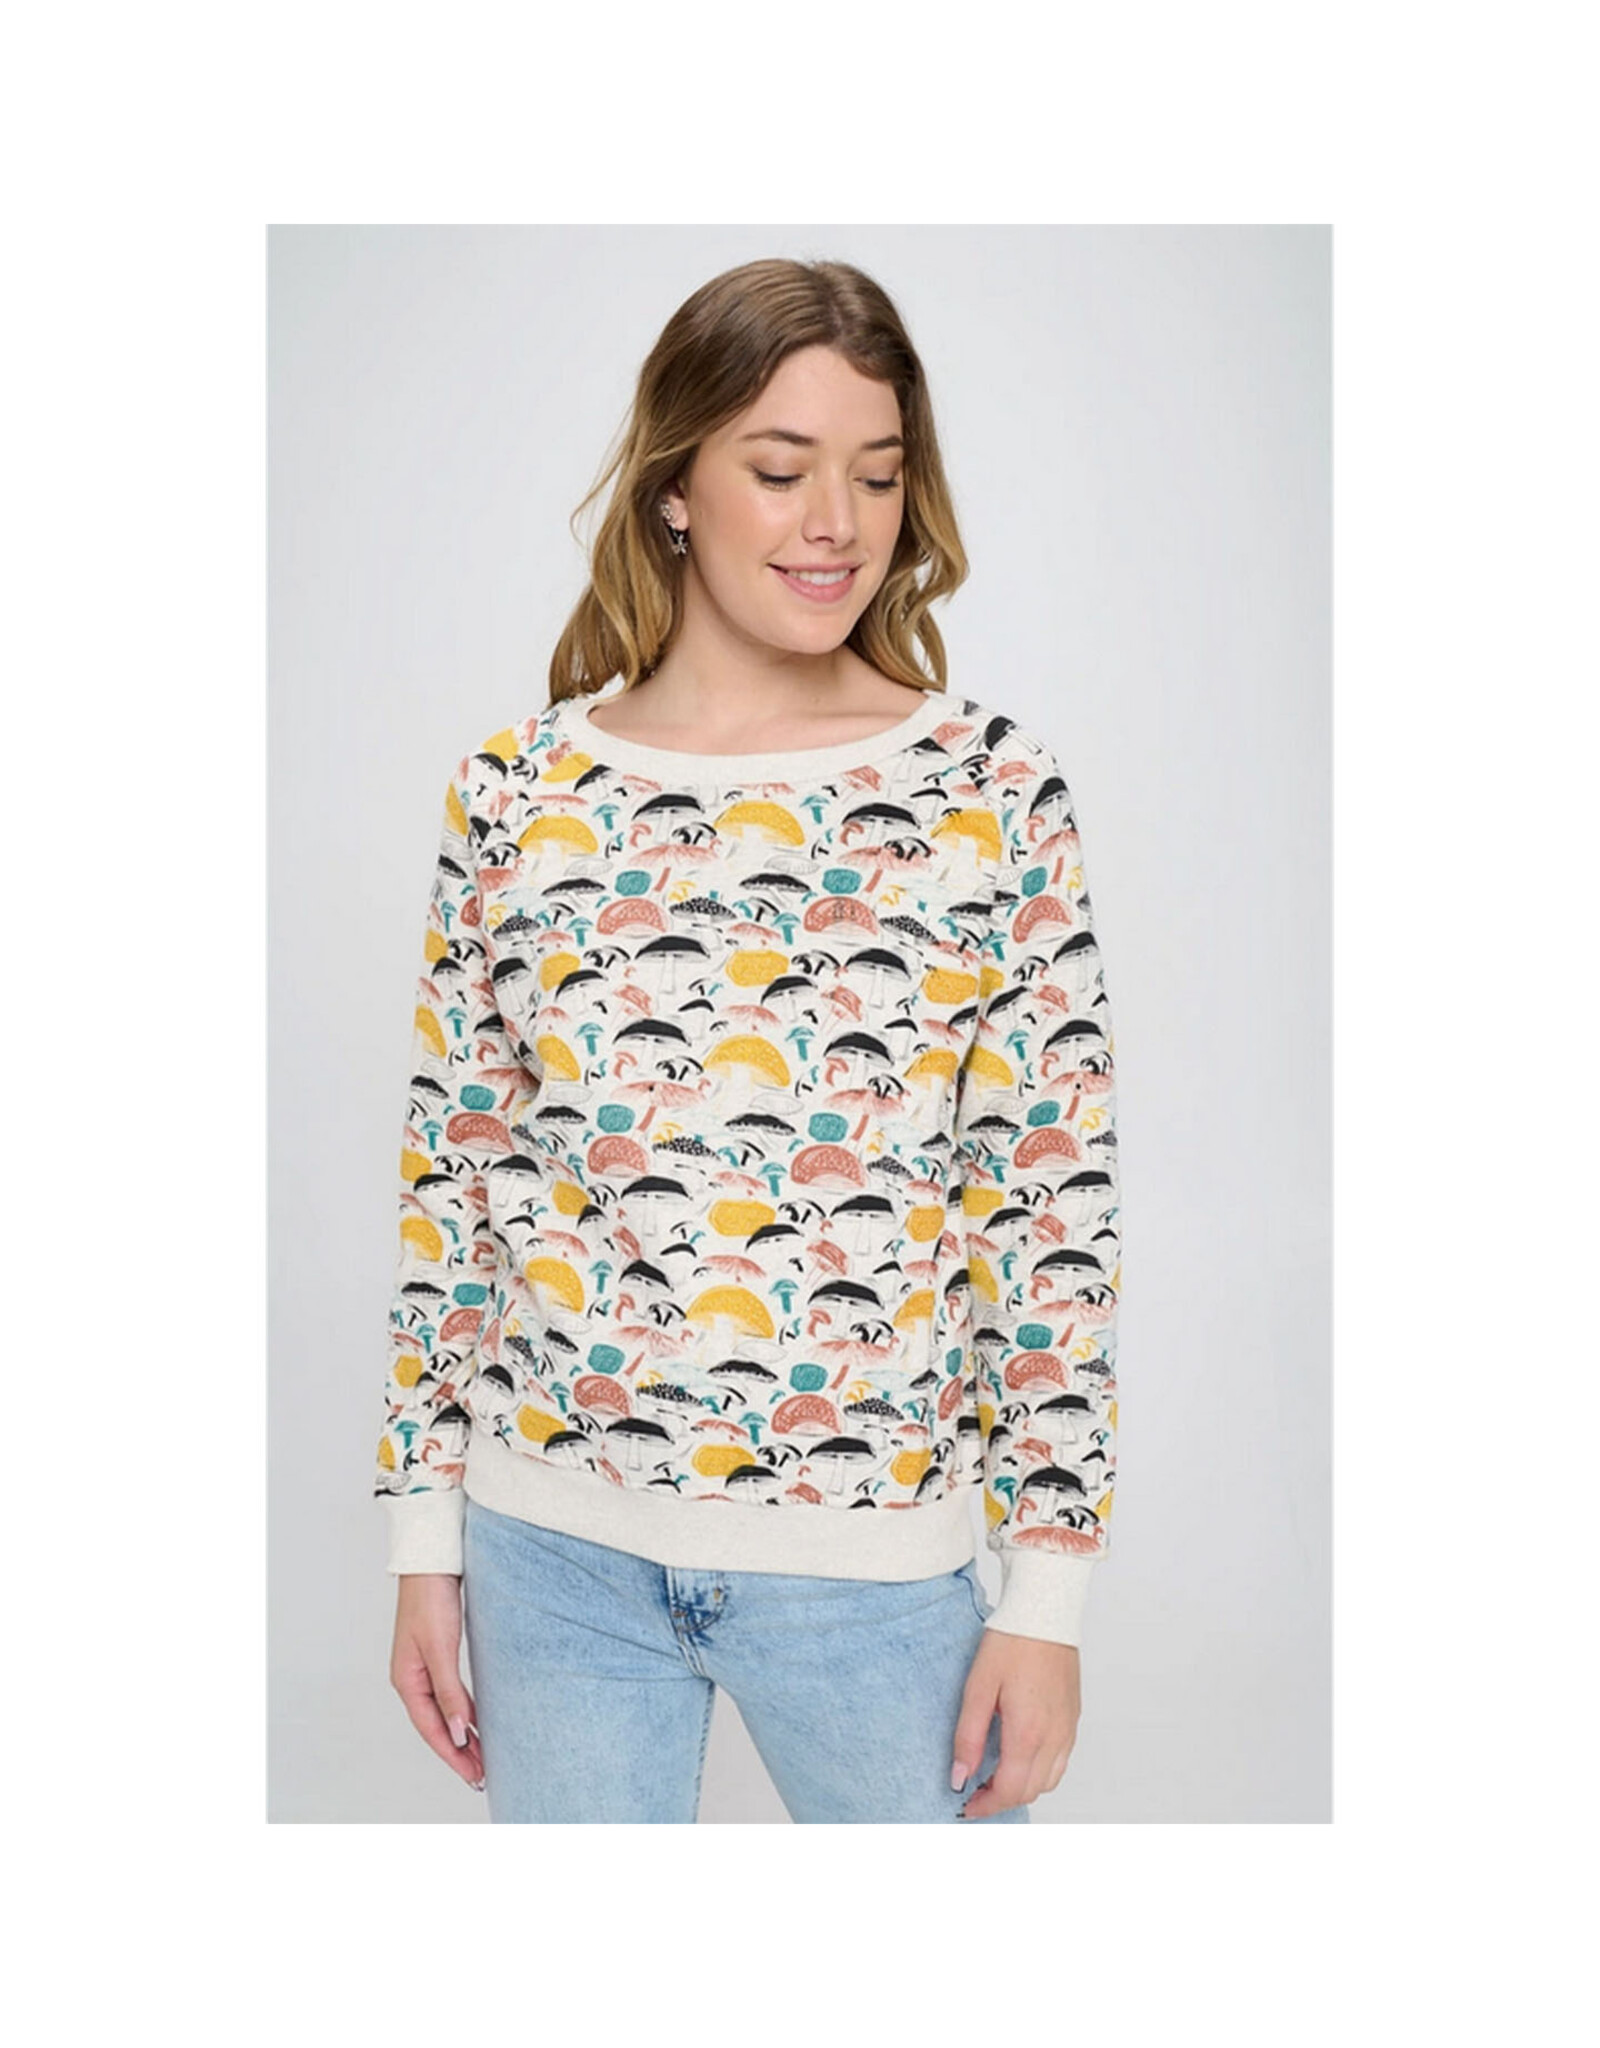 Wild Mushrooms Print Sweatshirt